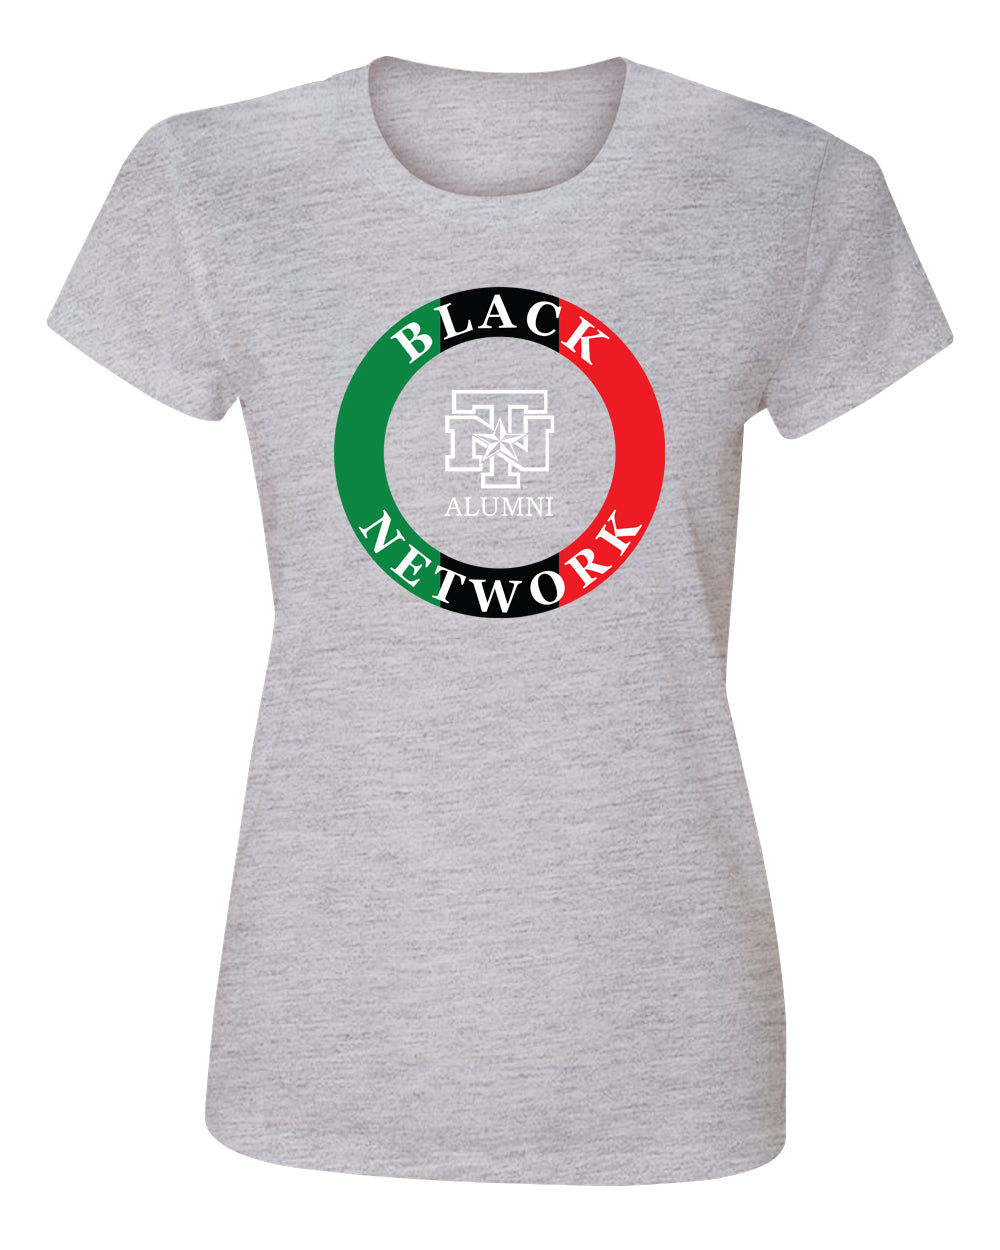 UNT Black Alumni Network x Alum Traditional Women's T-Shirt- Grey